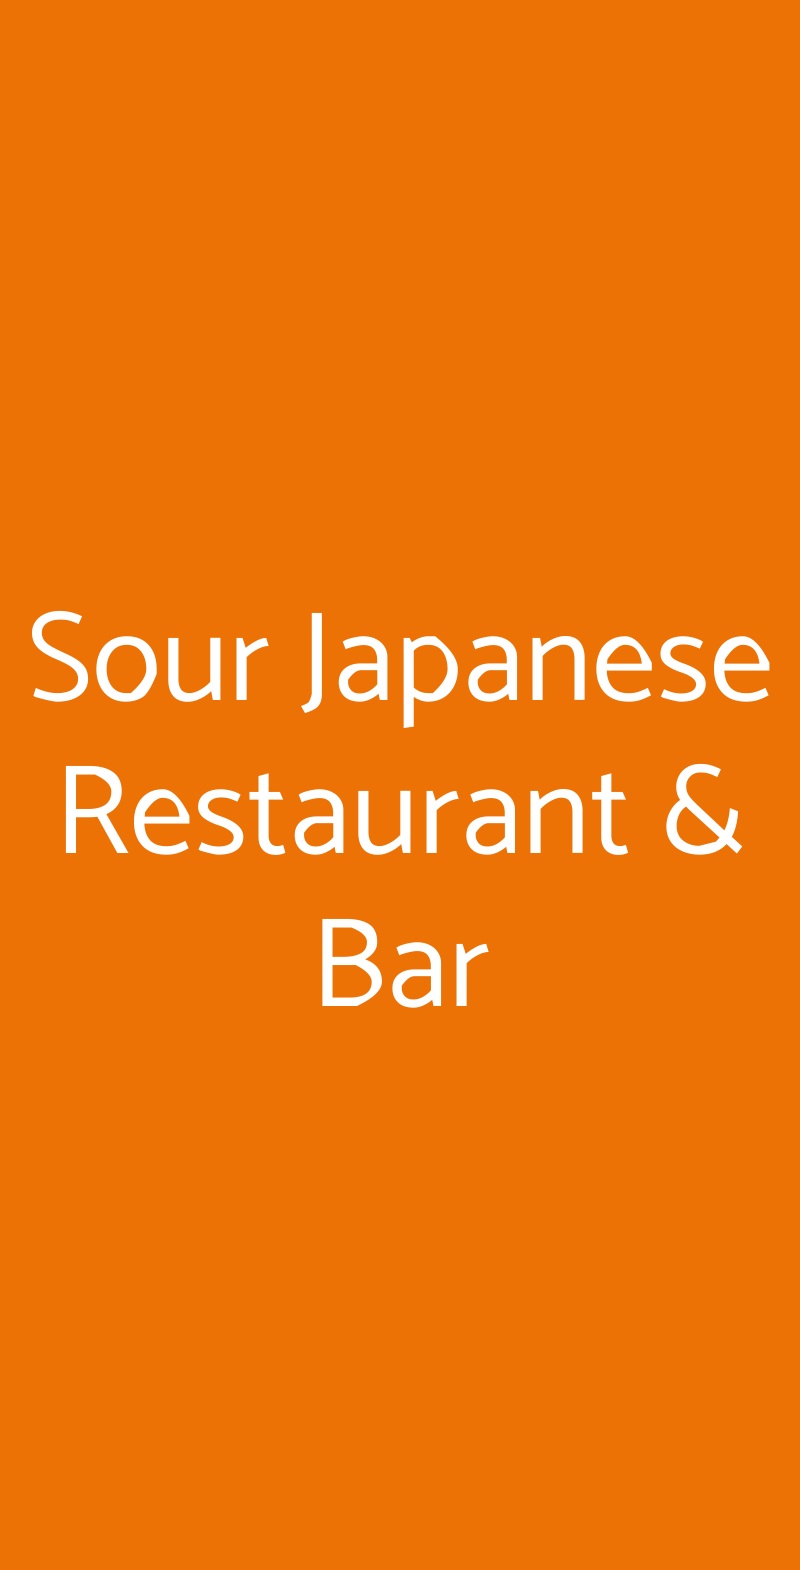 Sour Japanese Restaurant & Bar Portici menù 1 pagina